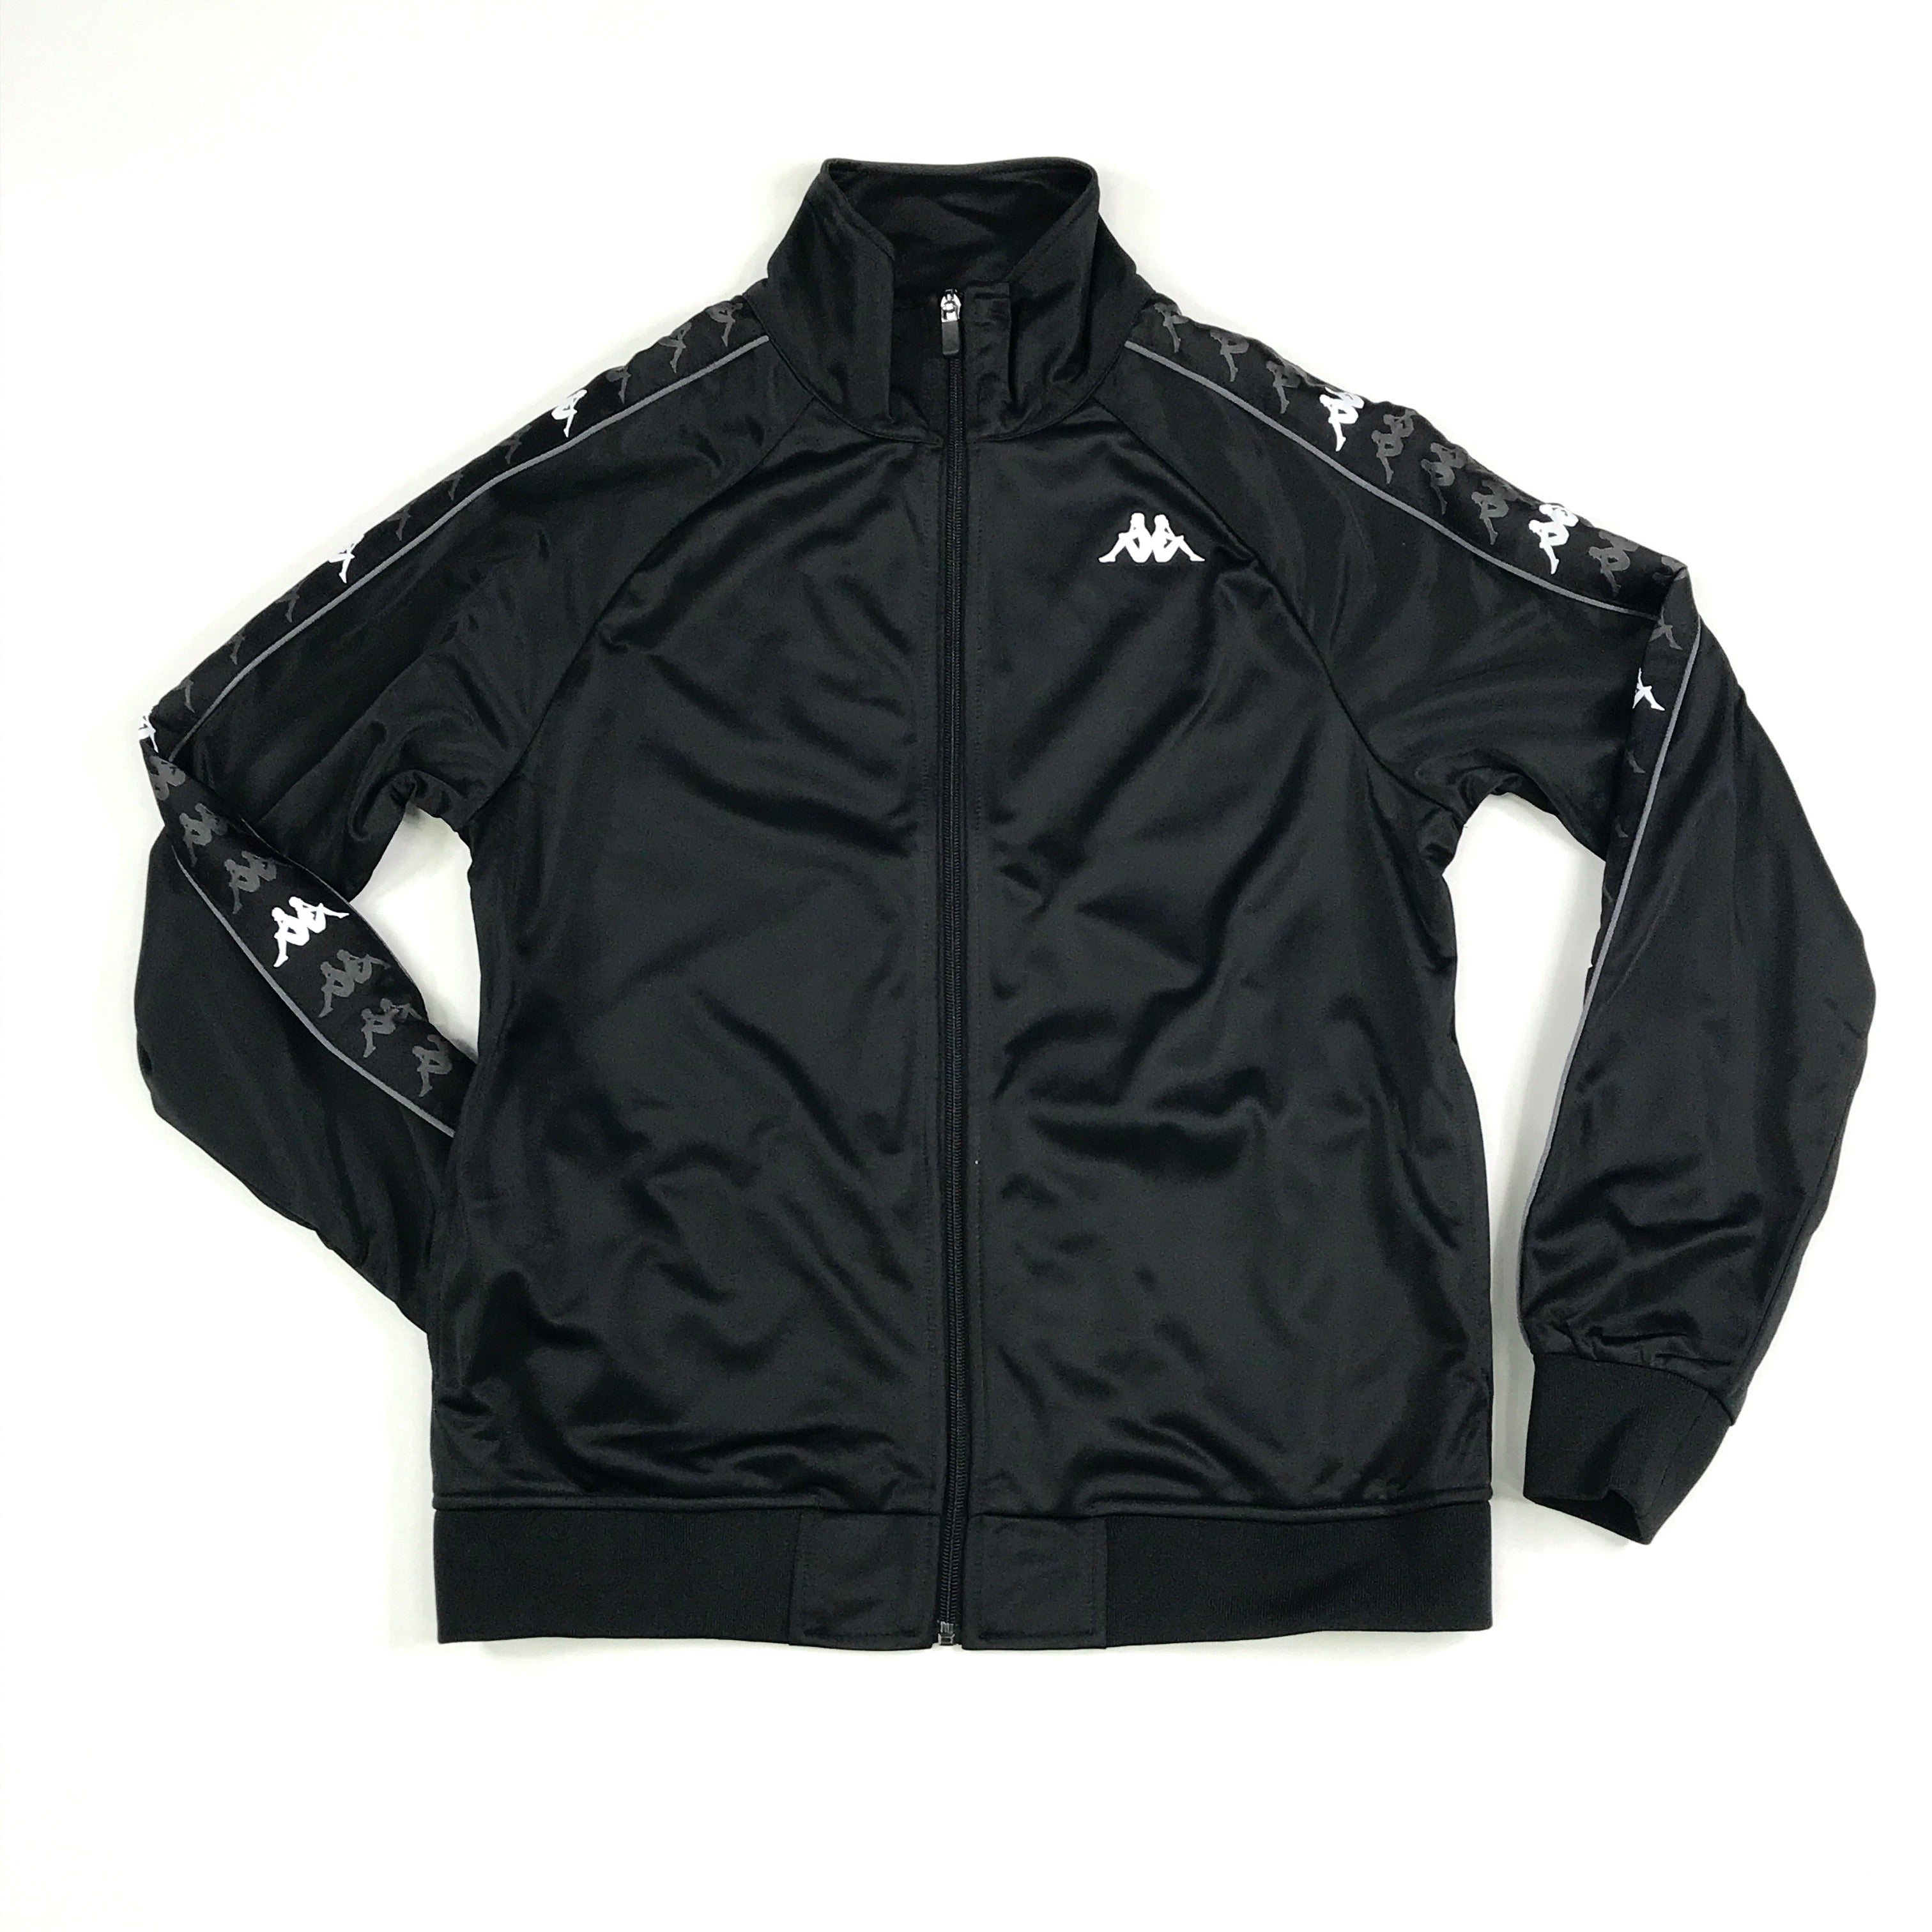 Kappa 222 Banda Dullo track jacket in black-dark grey-white